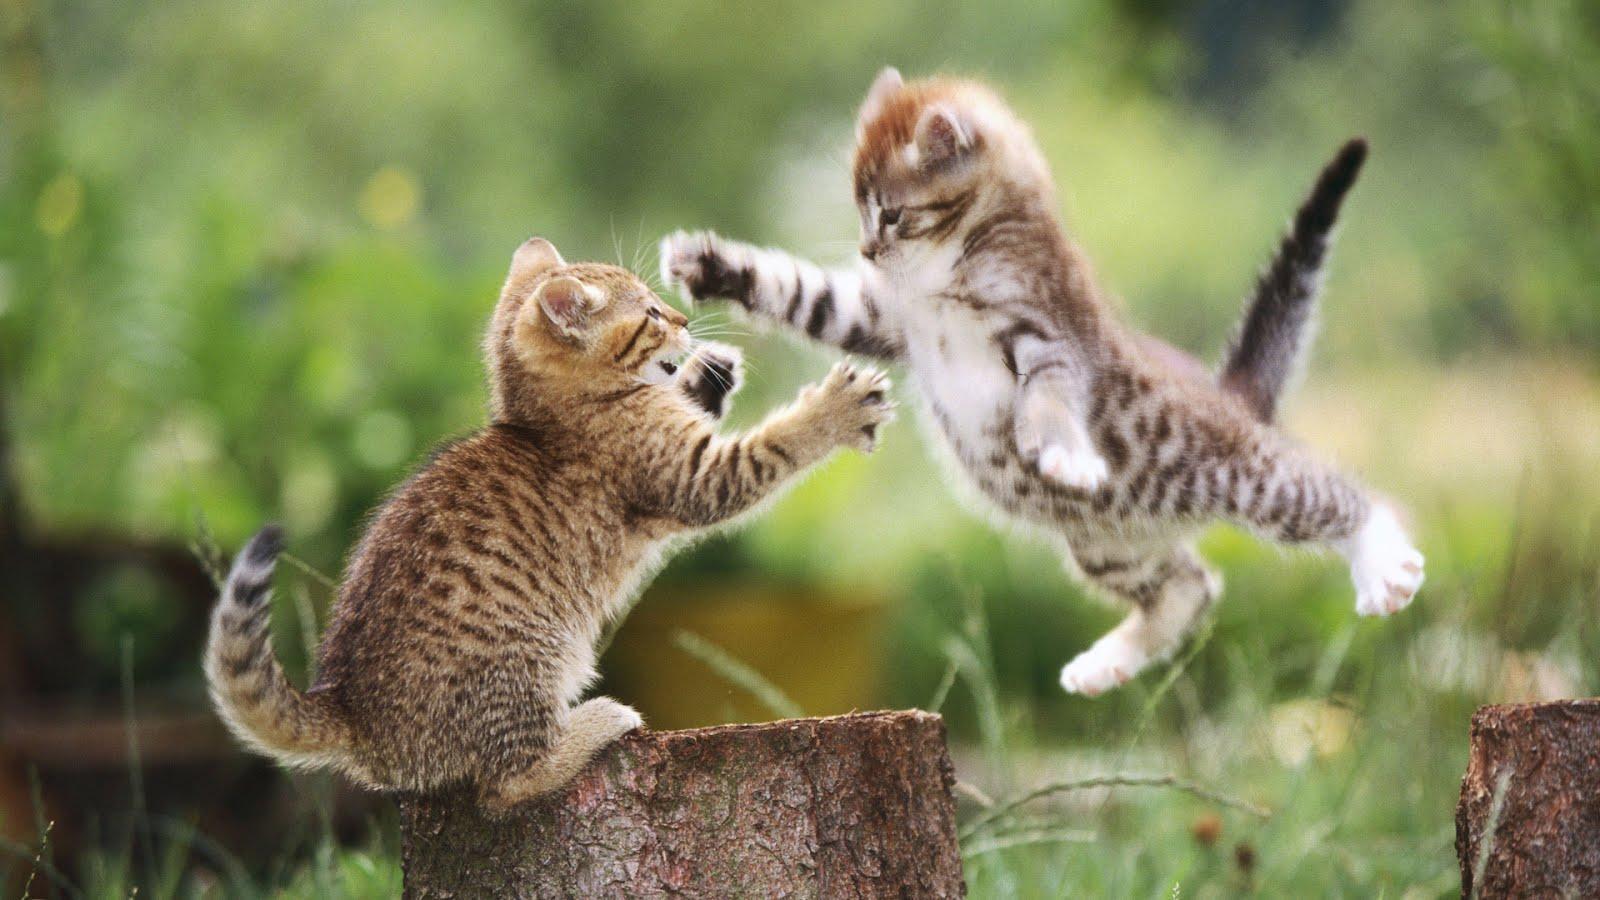 Download Cute Funny Cat Desktop wallpapers Image